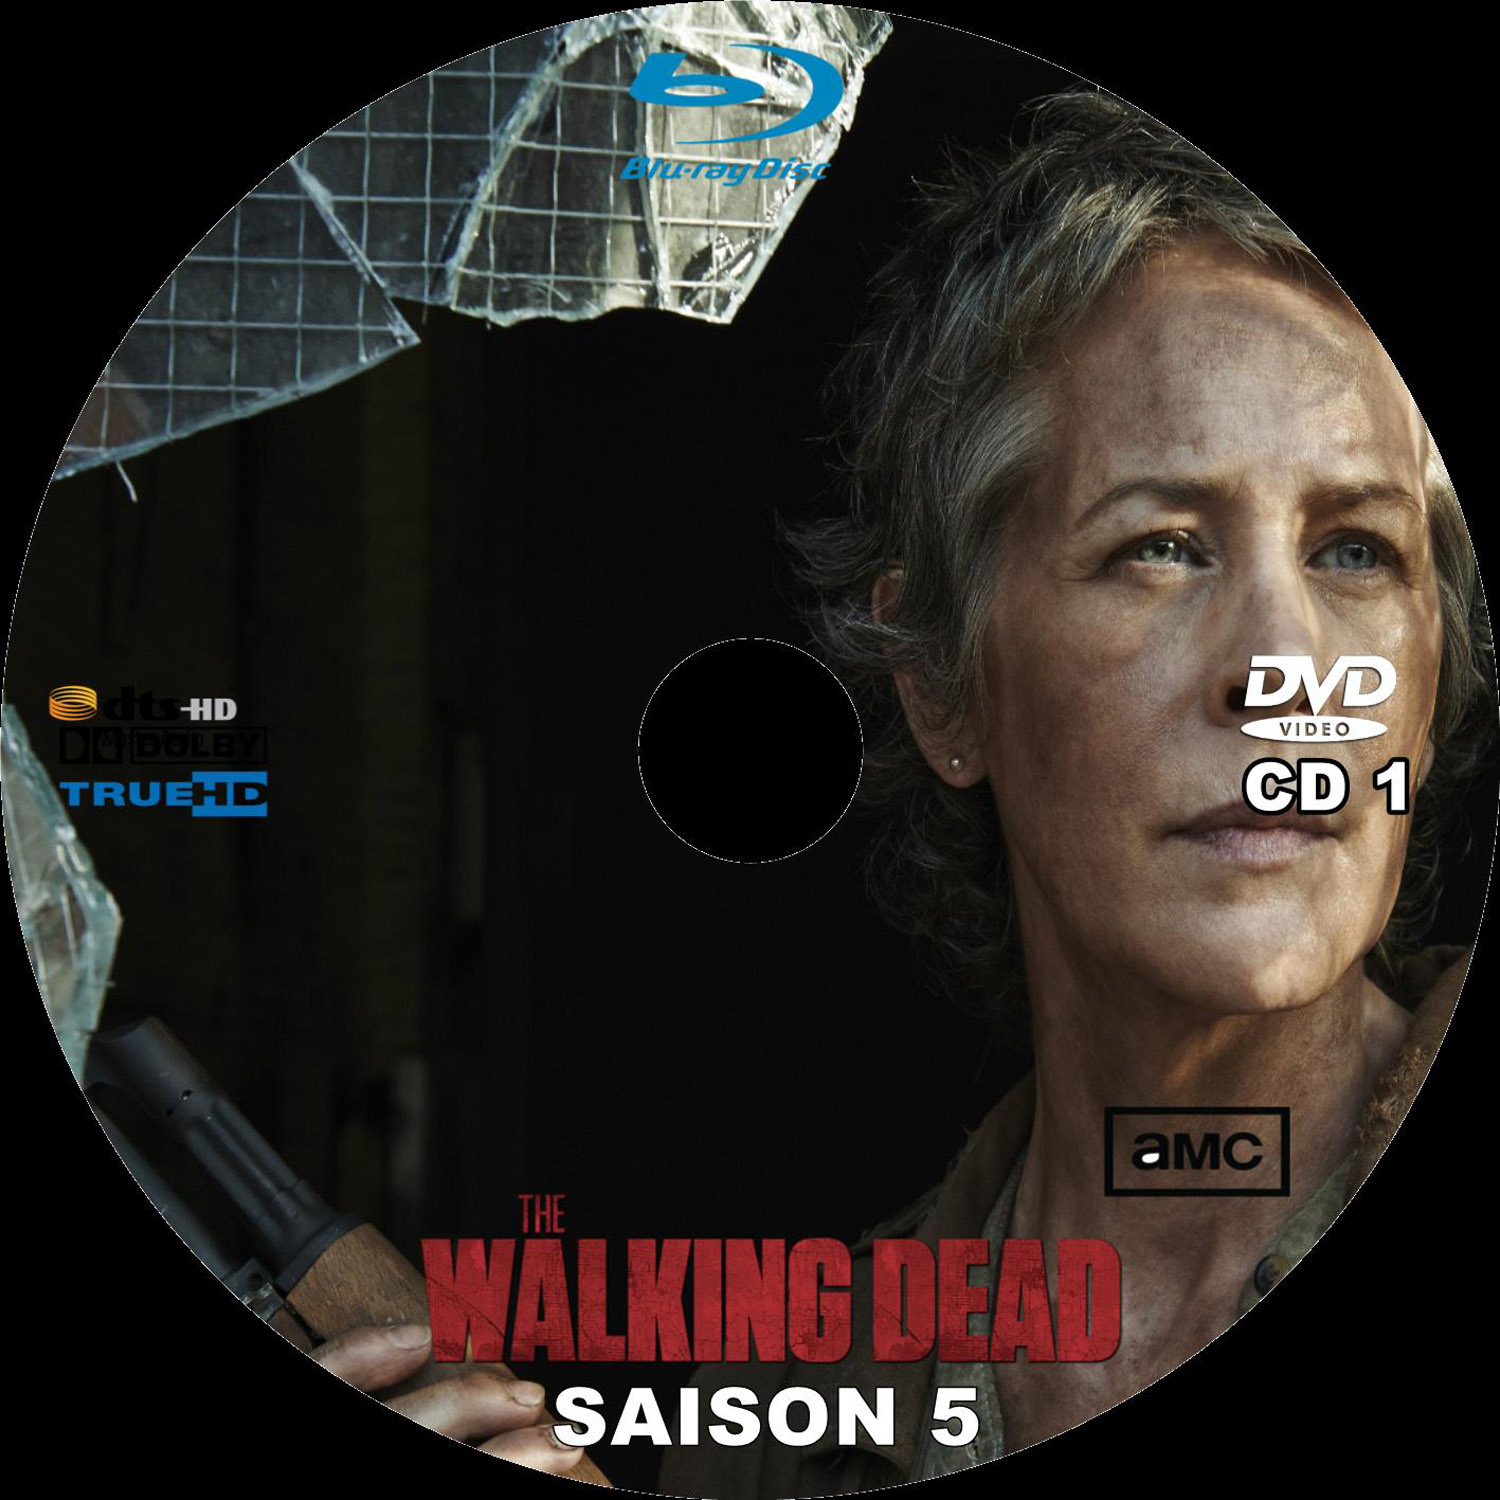 The walking dead saison 5 DISC 1 custom